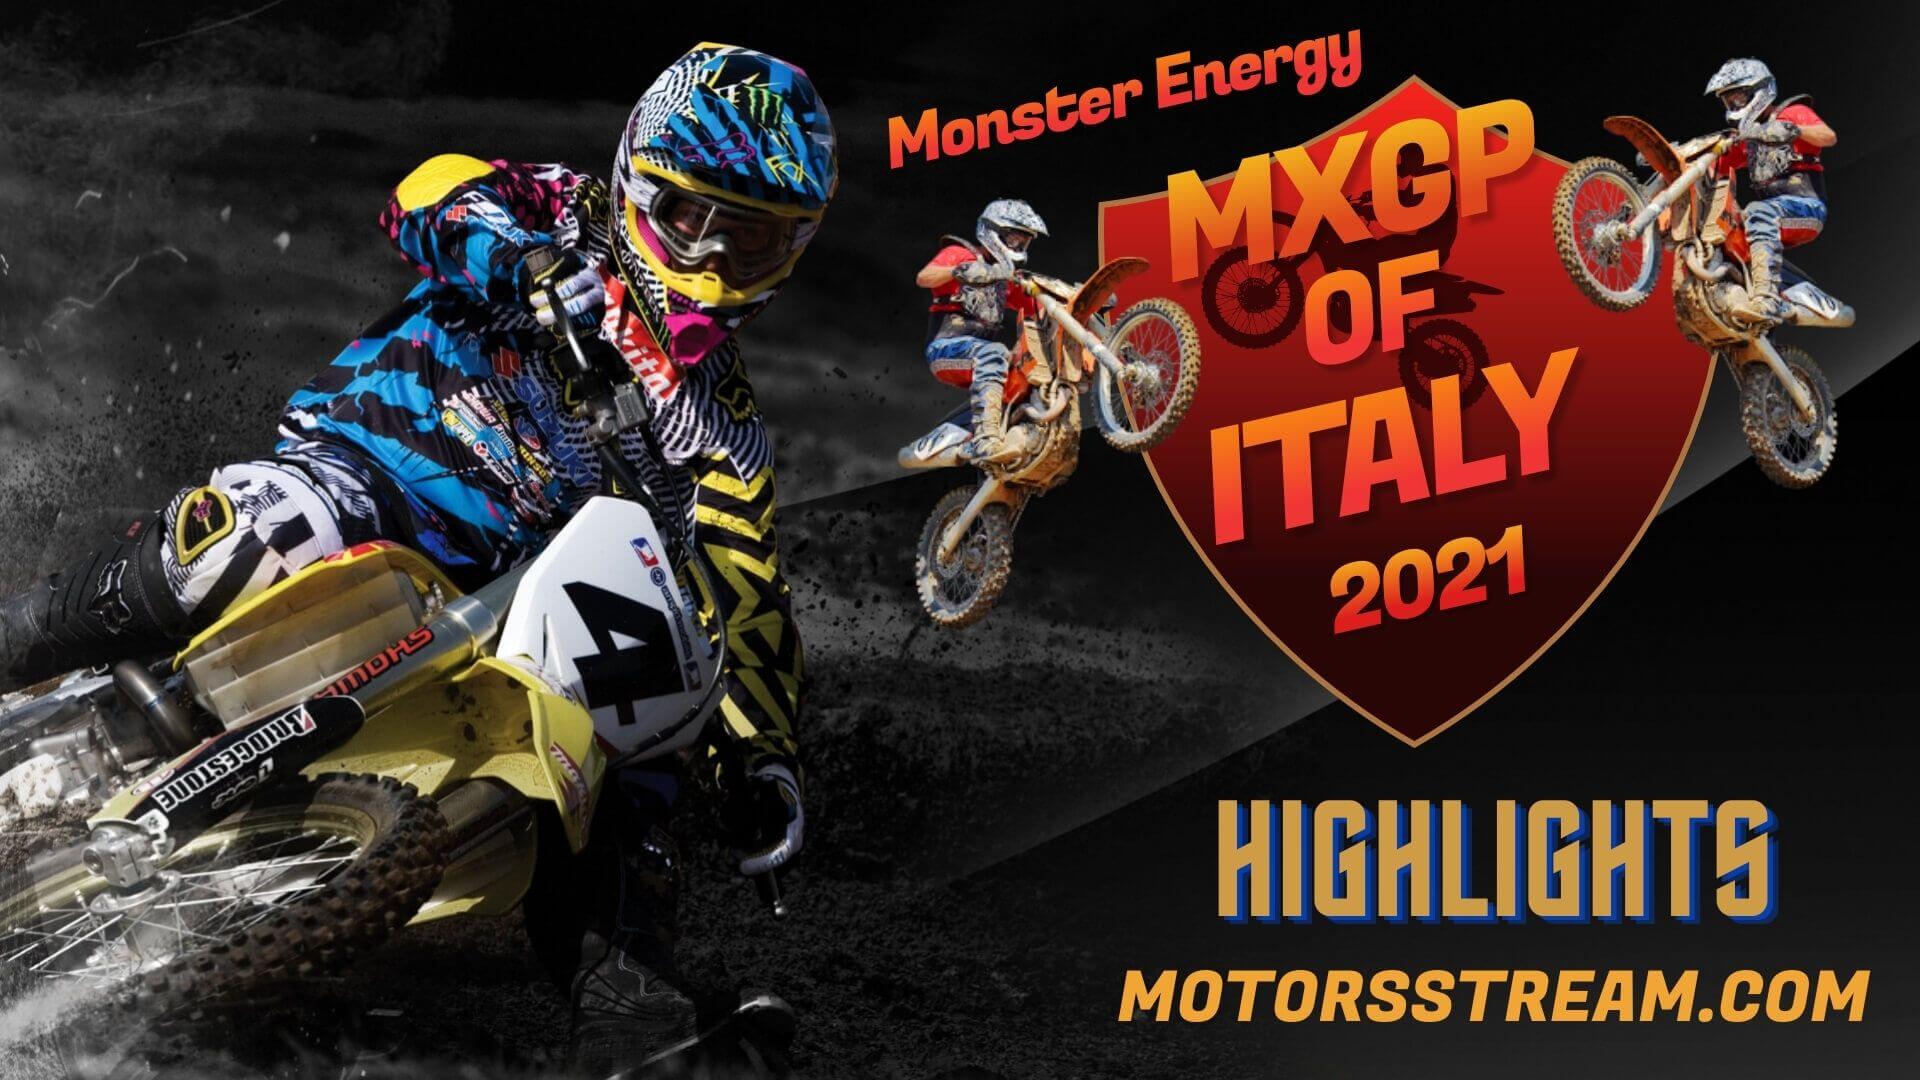 FIM Motocross WC Italy Highlight 2021 MXGP